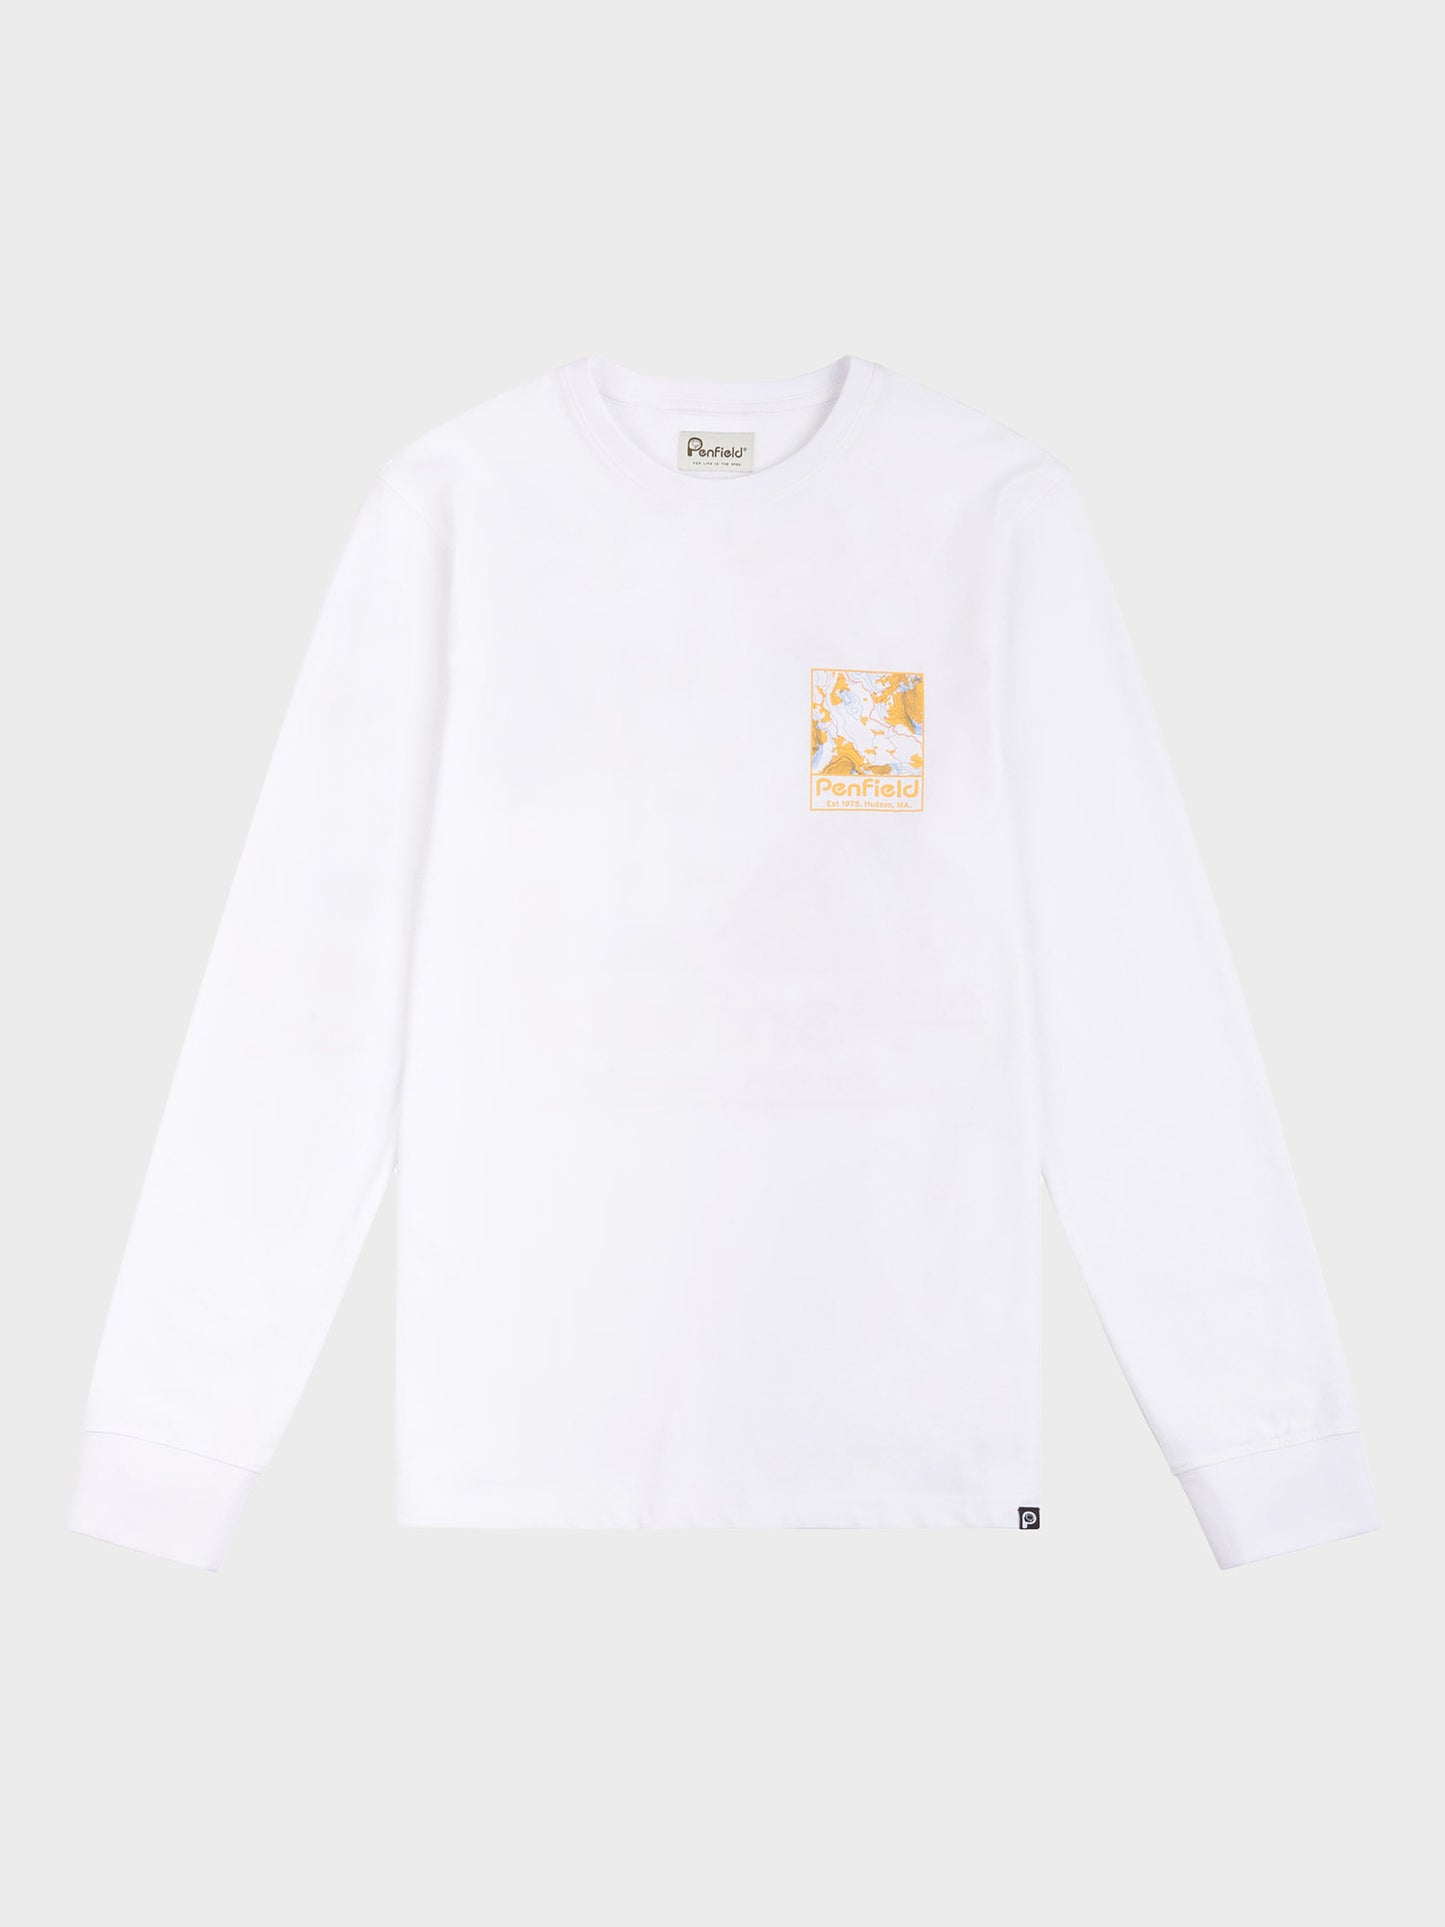 Yosemite Trail Satellite Long Sleeve T-Shirt in Bright White